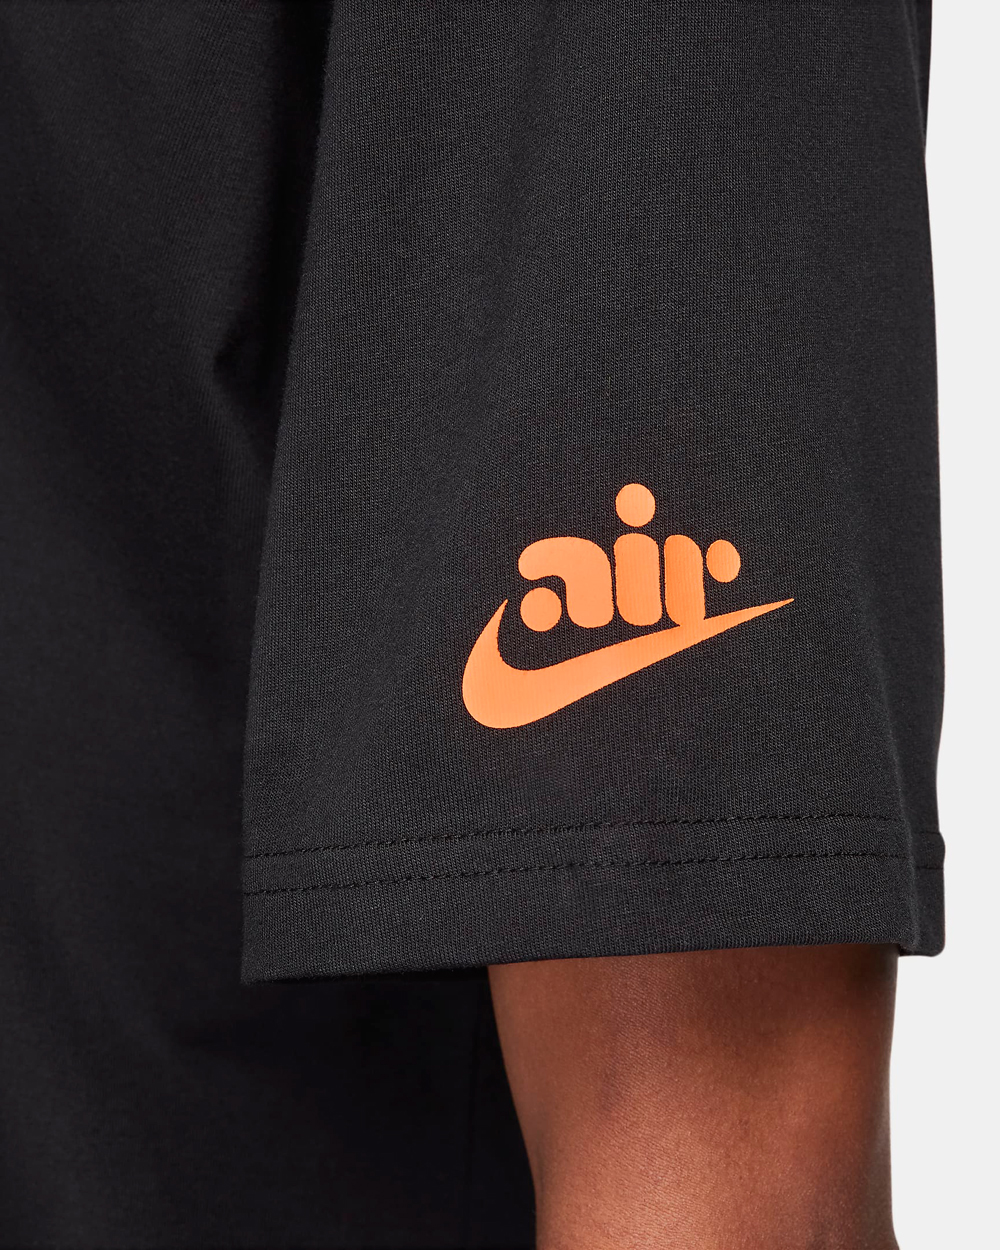 Nike-Air-Max-Plus-T-Shirt-Black-Purple-Orange-4